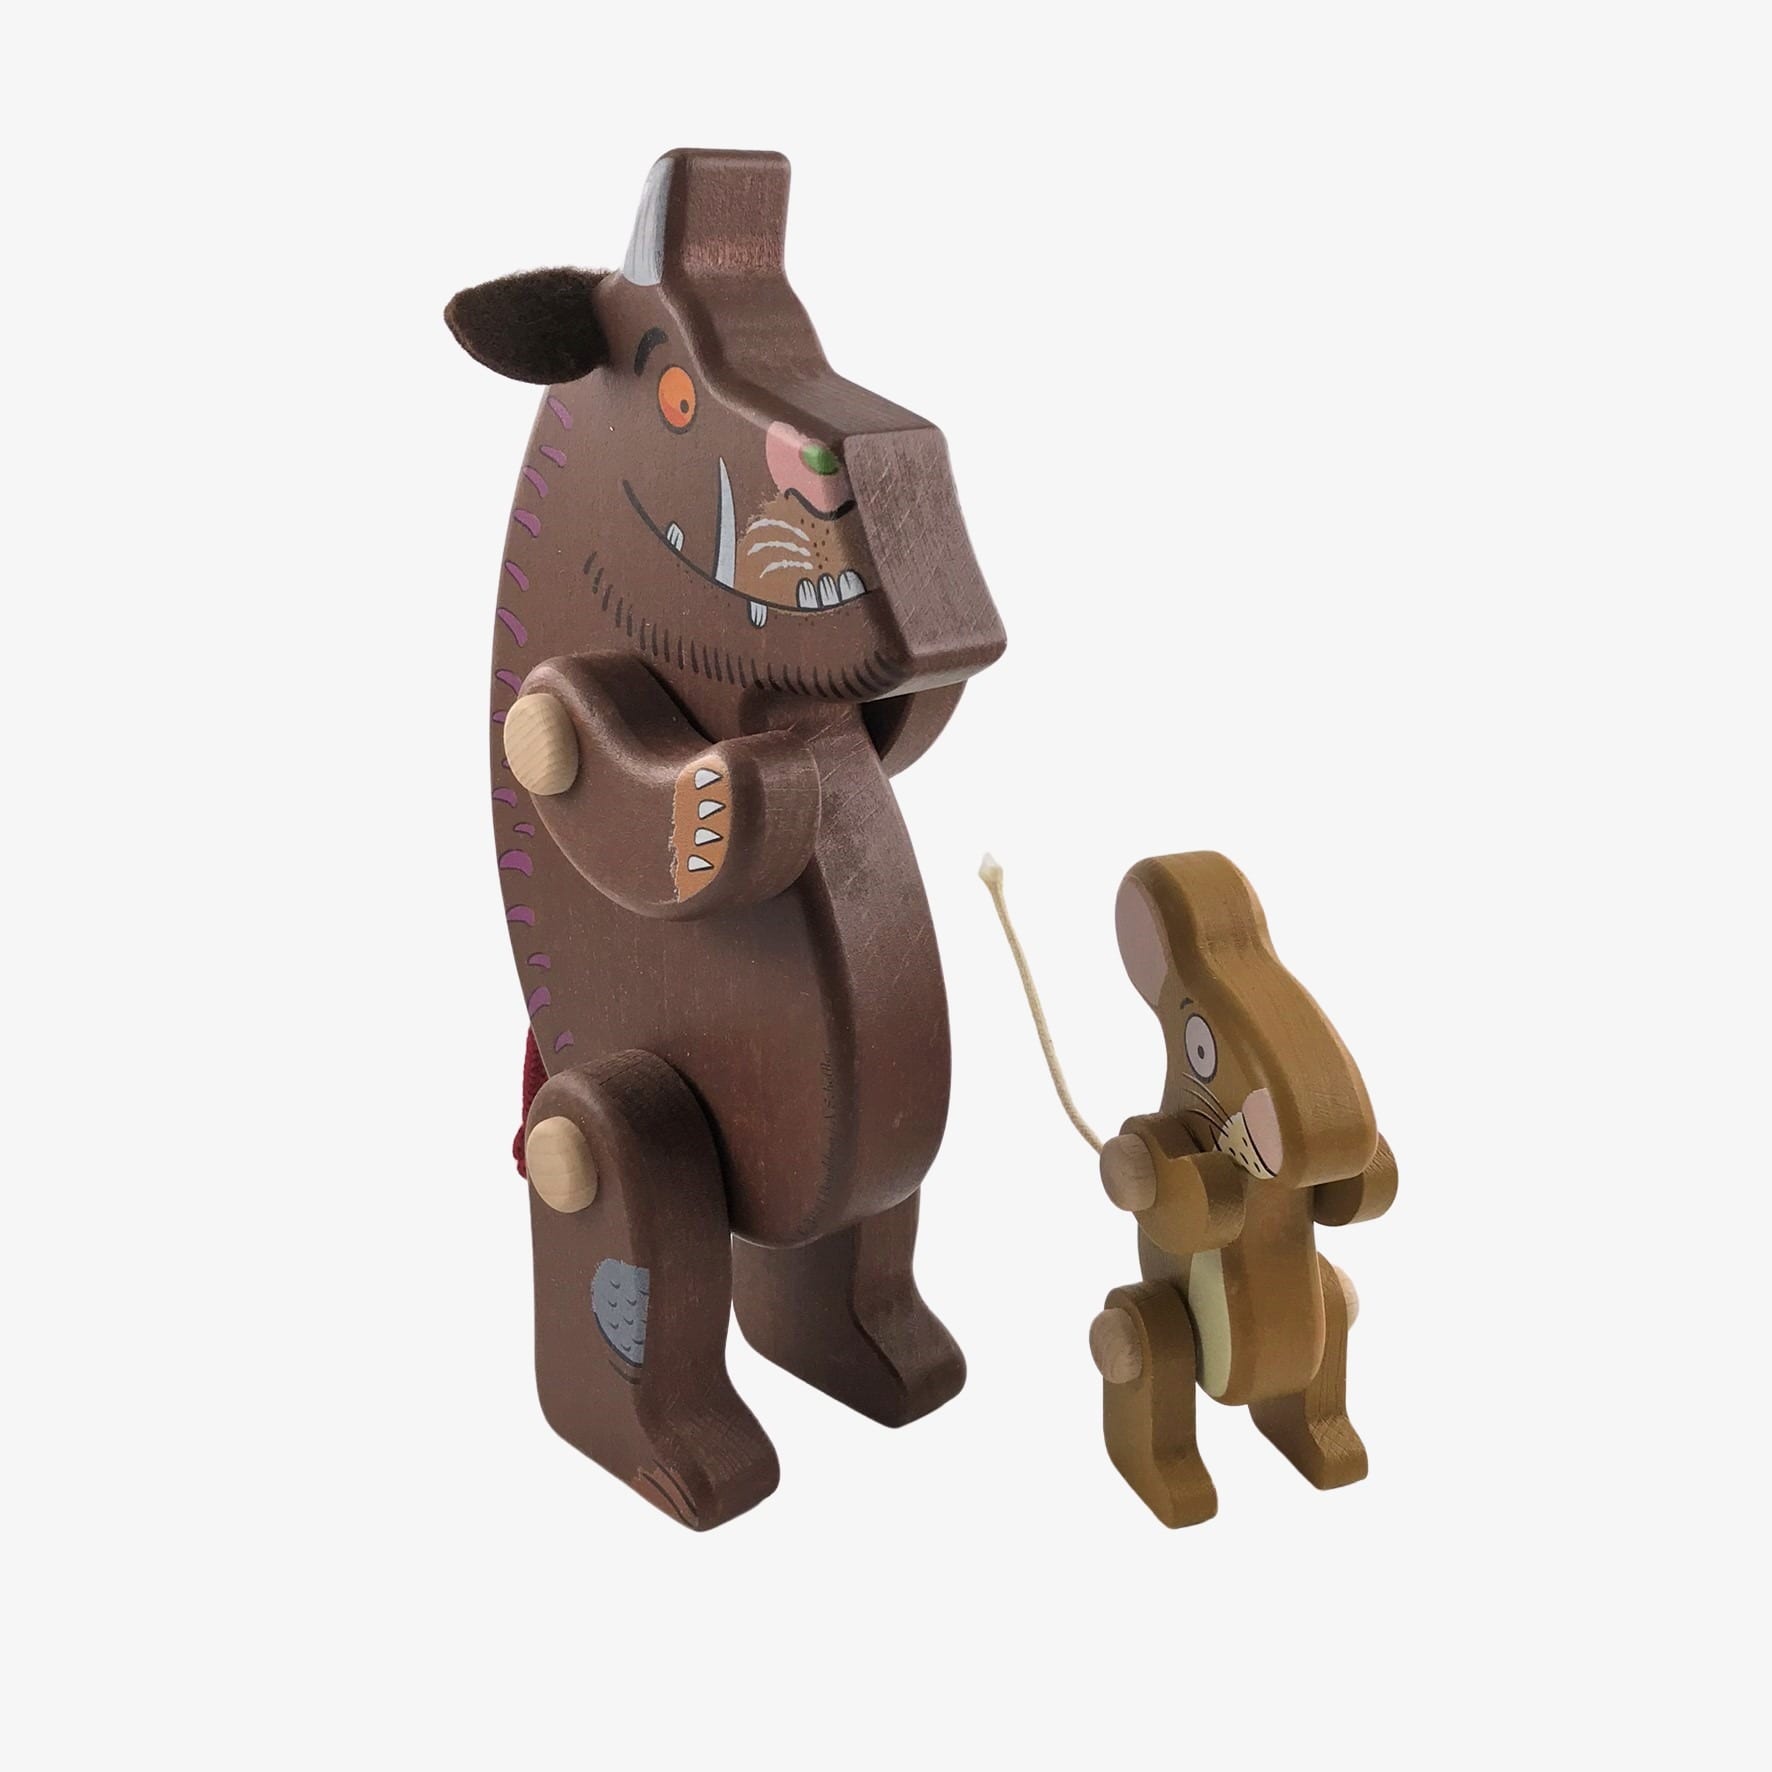 gruffalo wooden figures